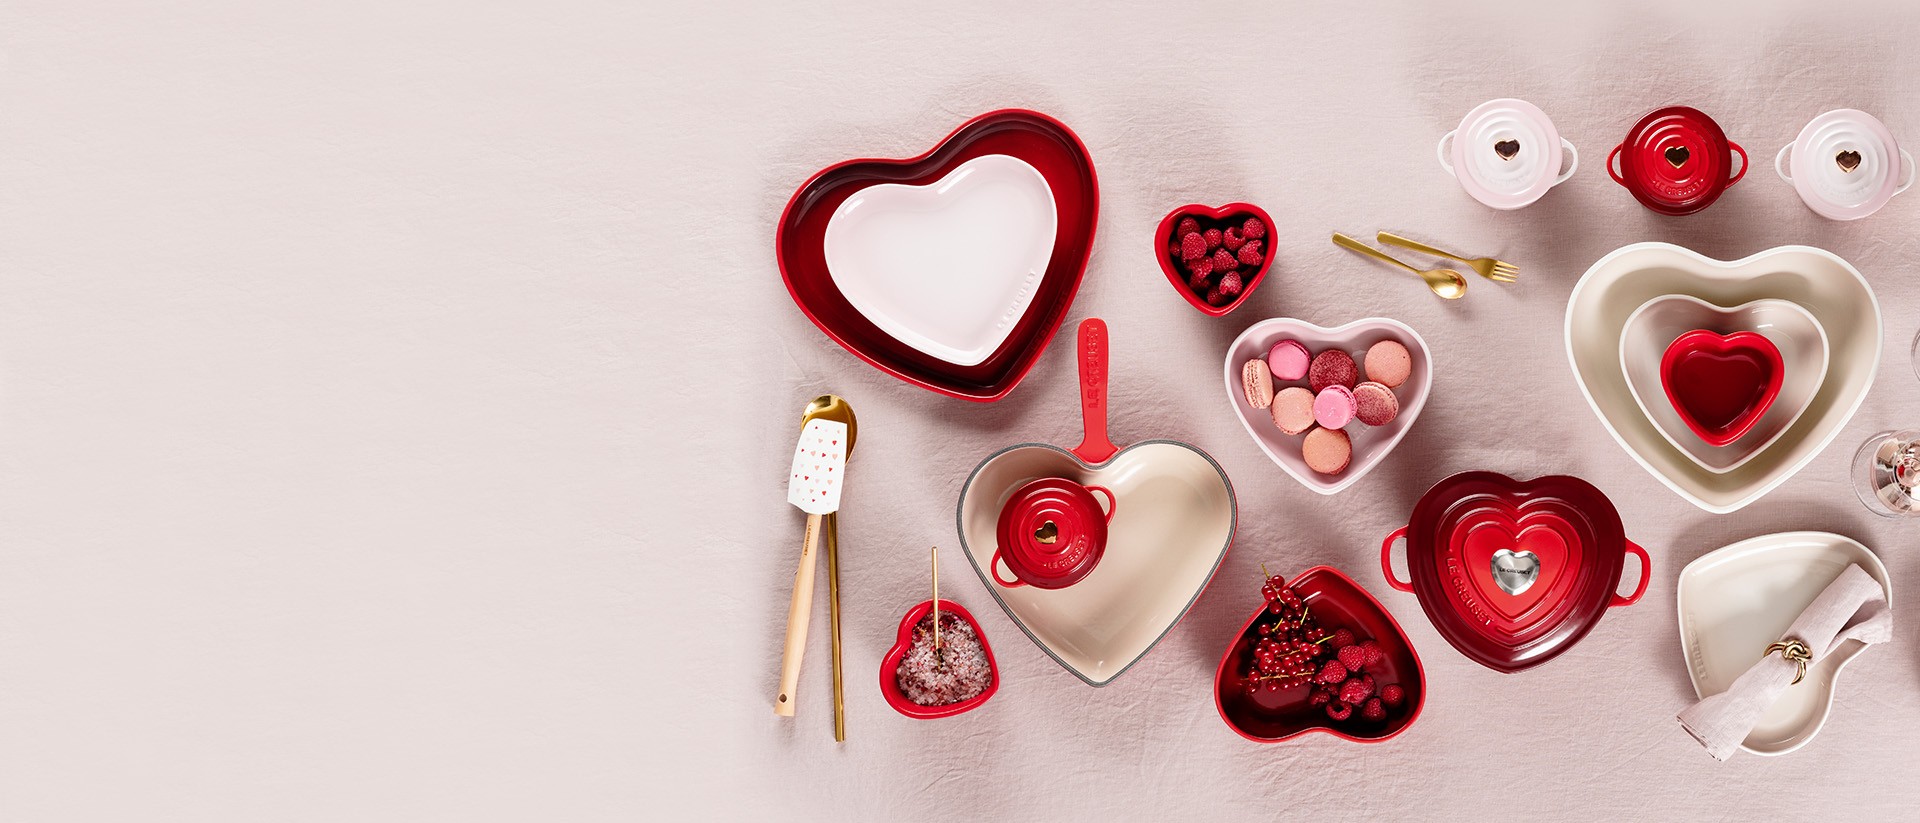 Shop Le Creuset's Valentine's Day Collection